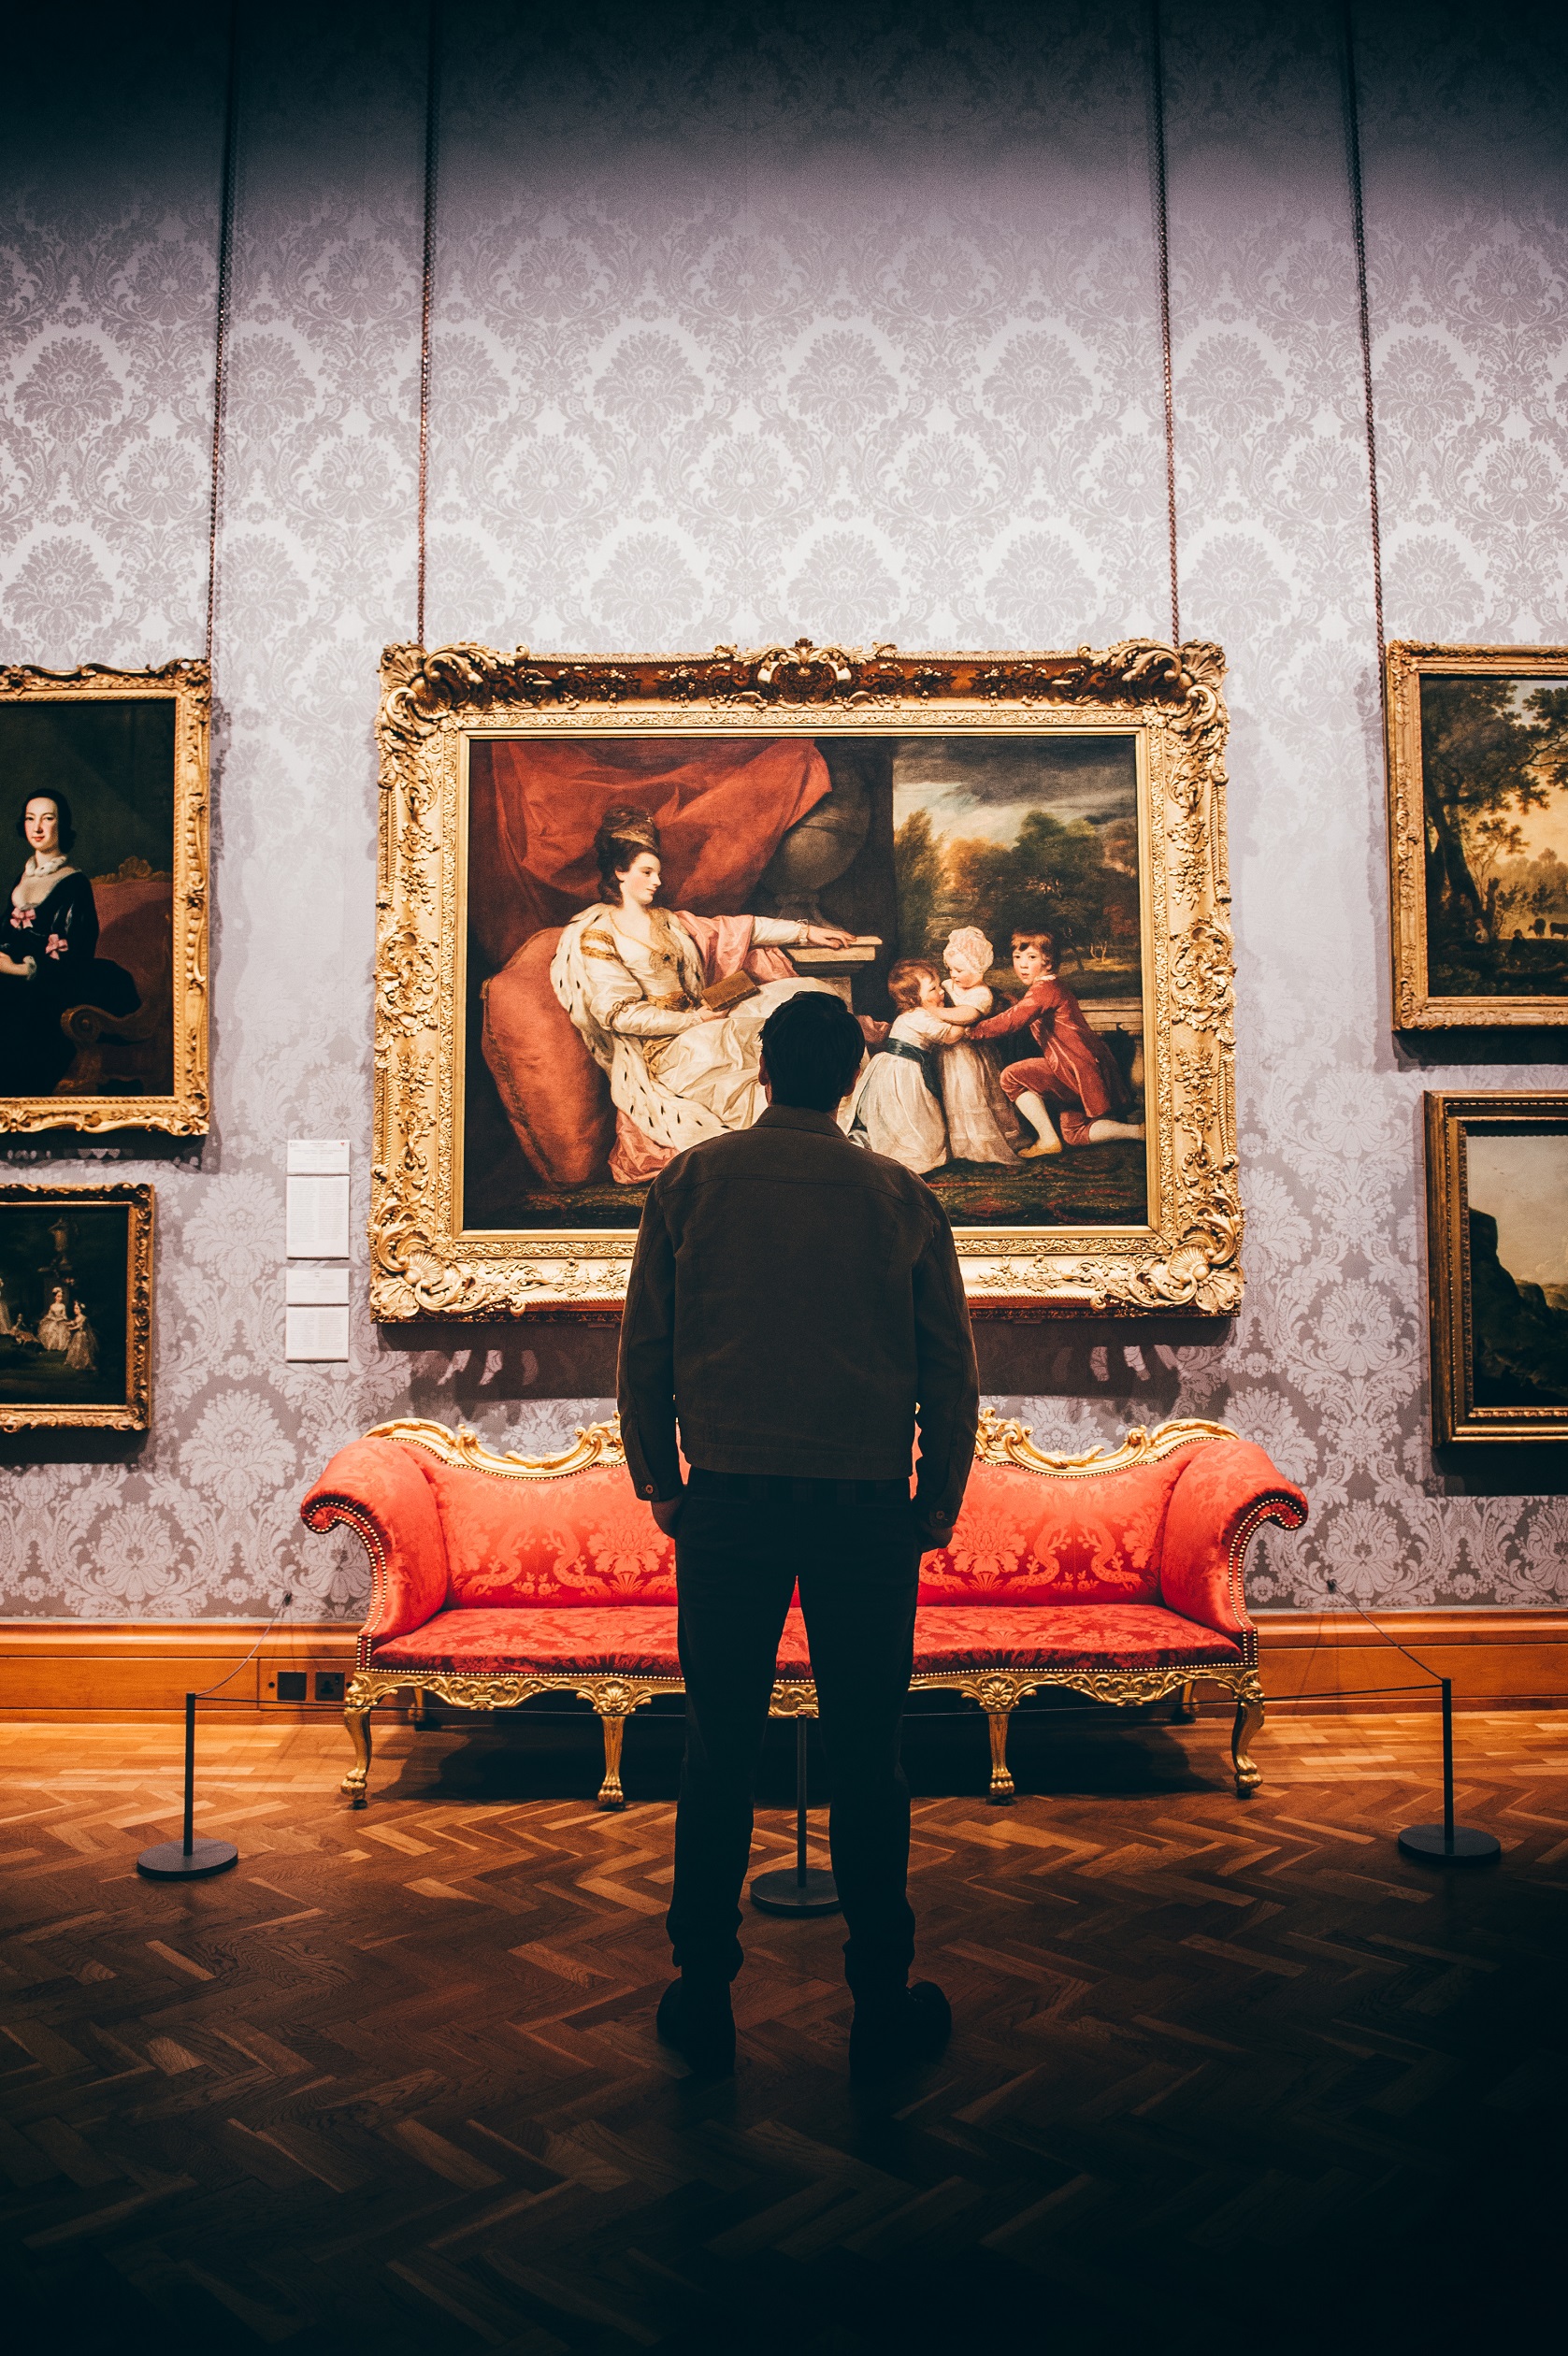 A young man admiring a piece of historic artwork